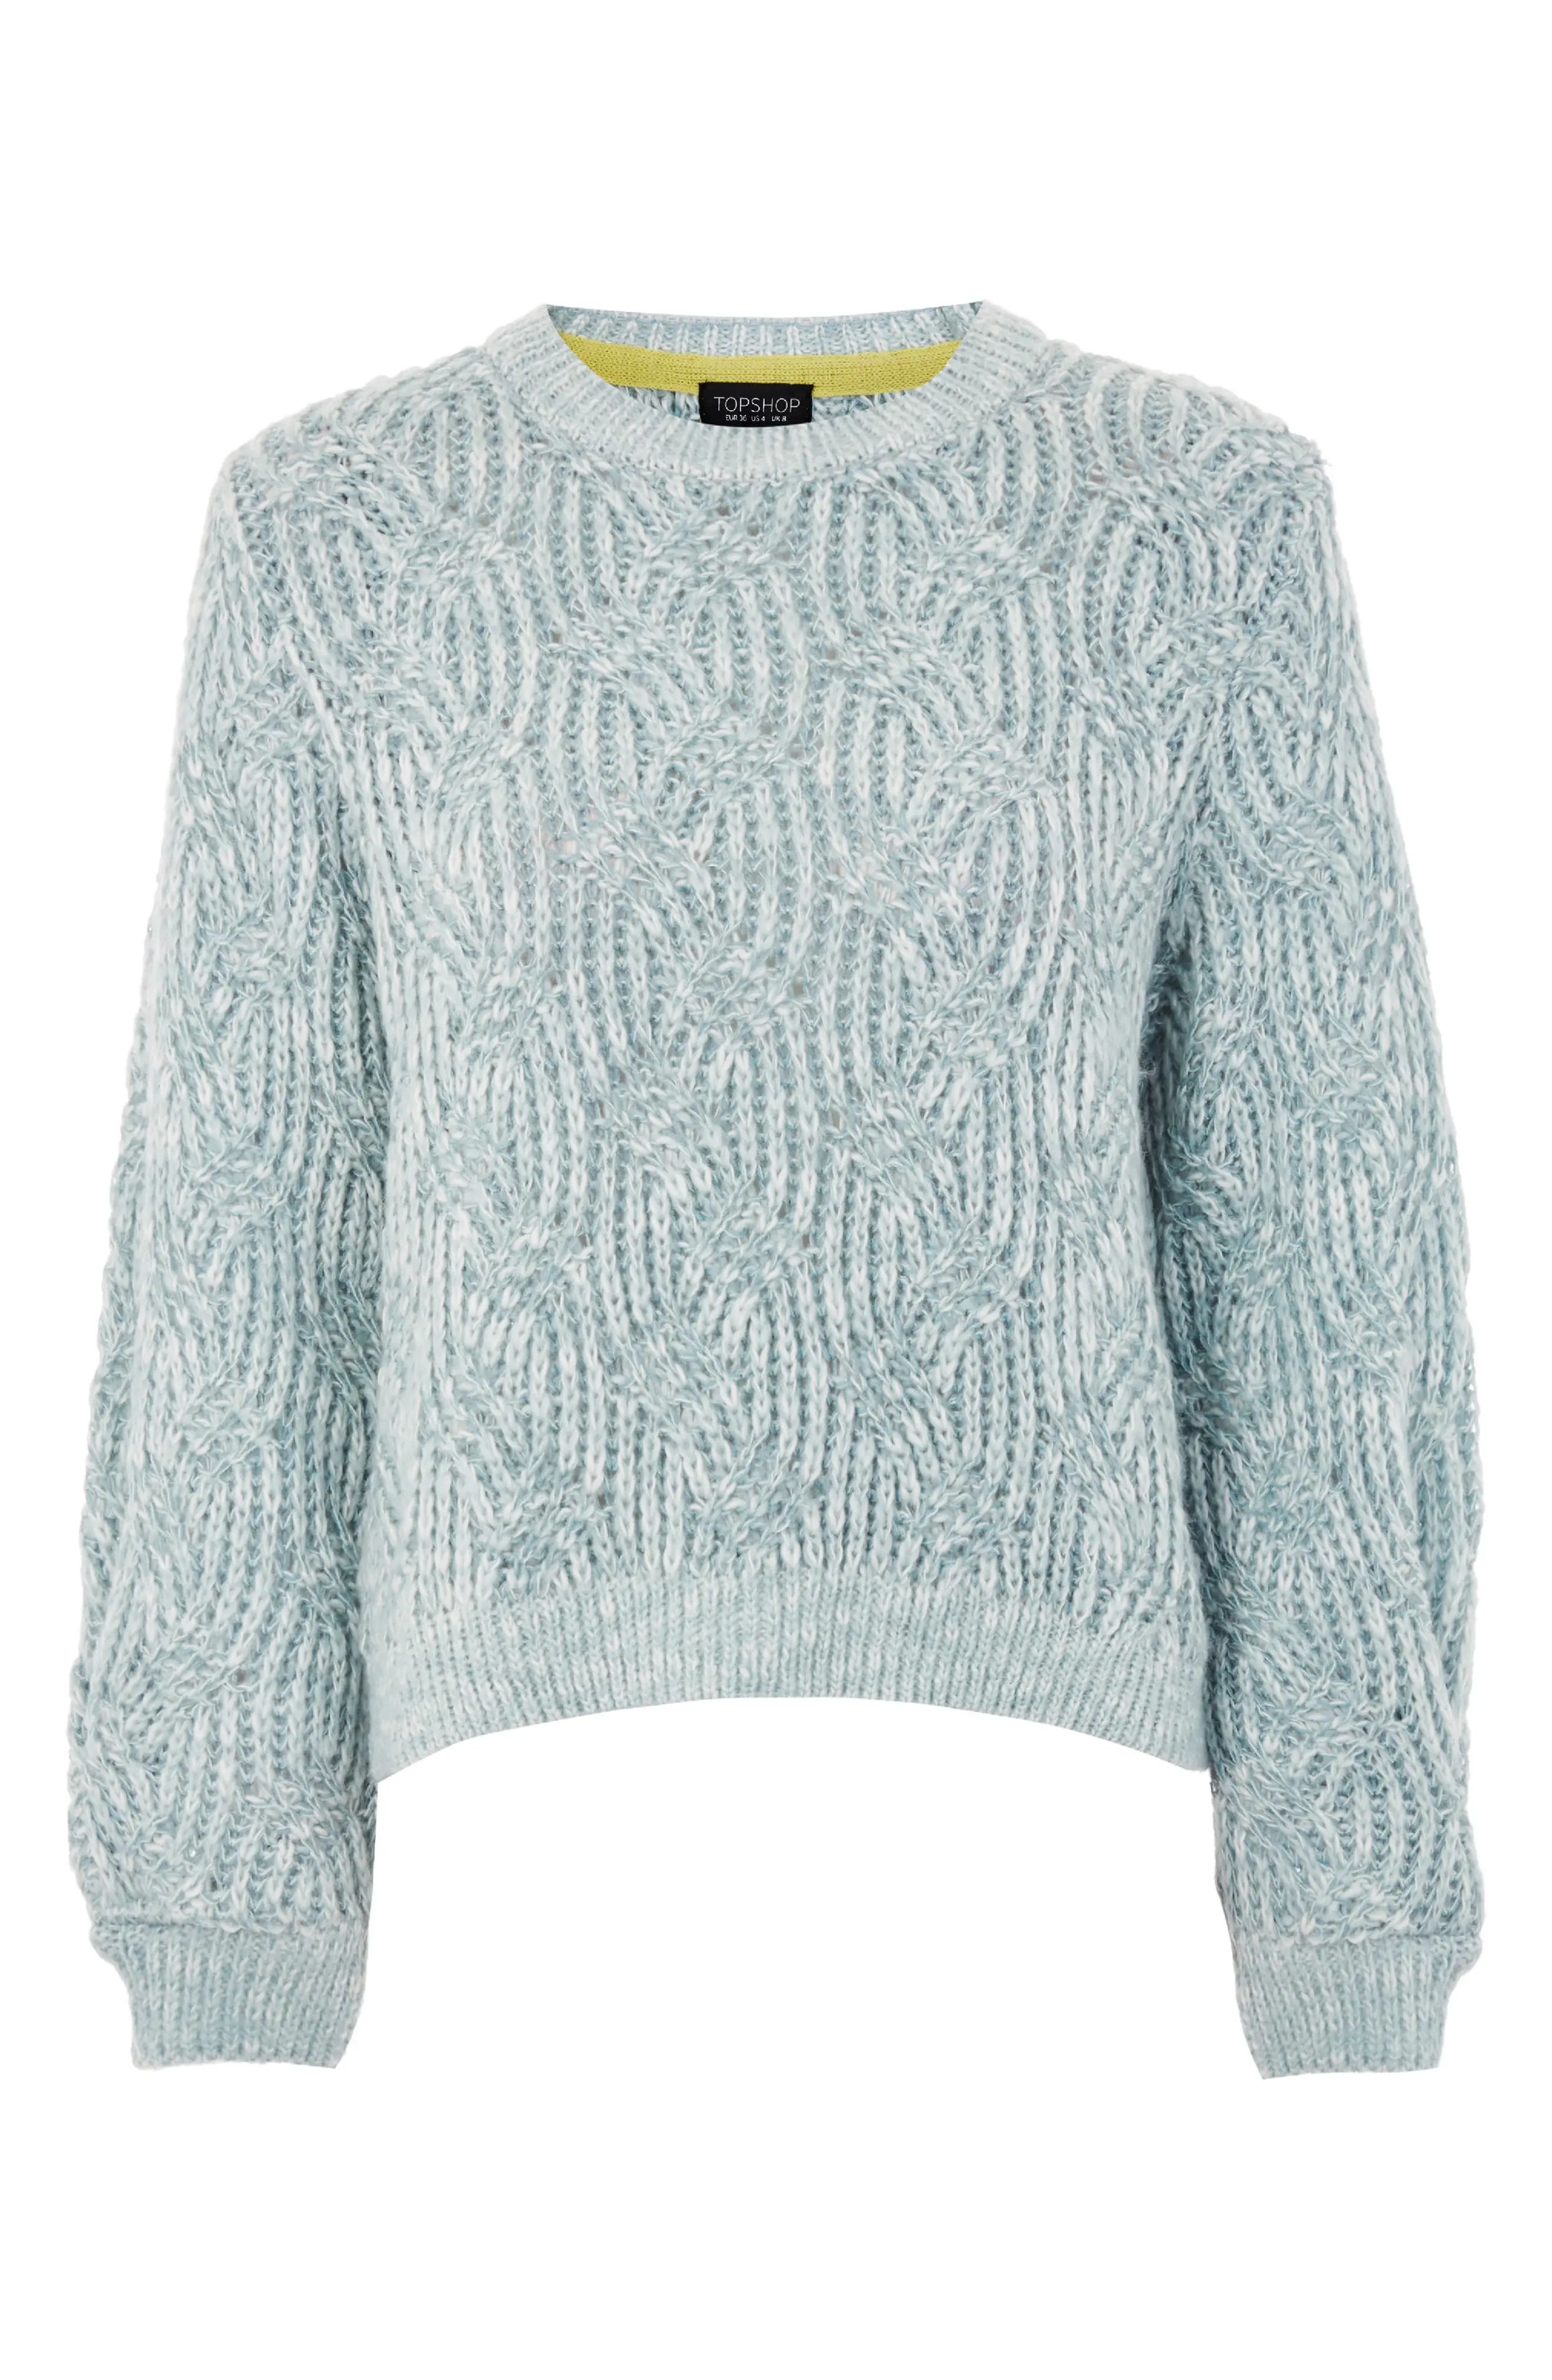 Swirl Tuck Sweater | Nordstrom